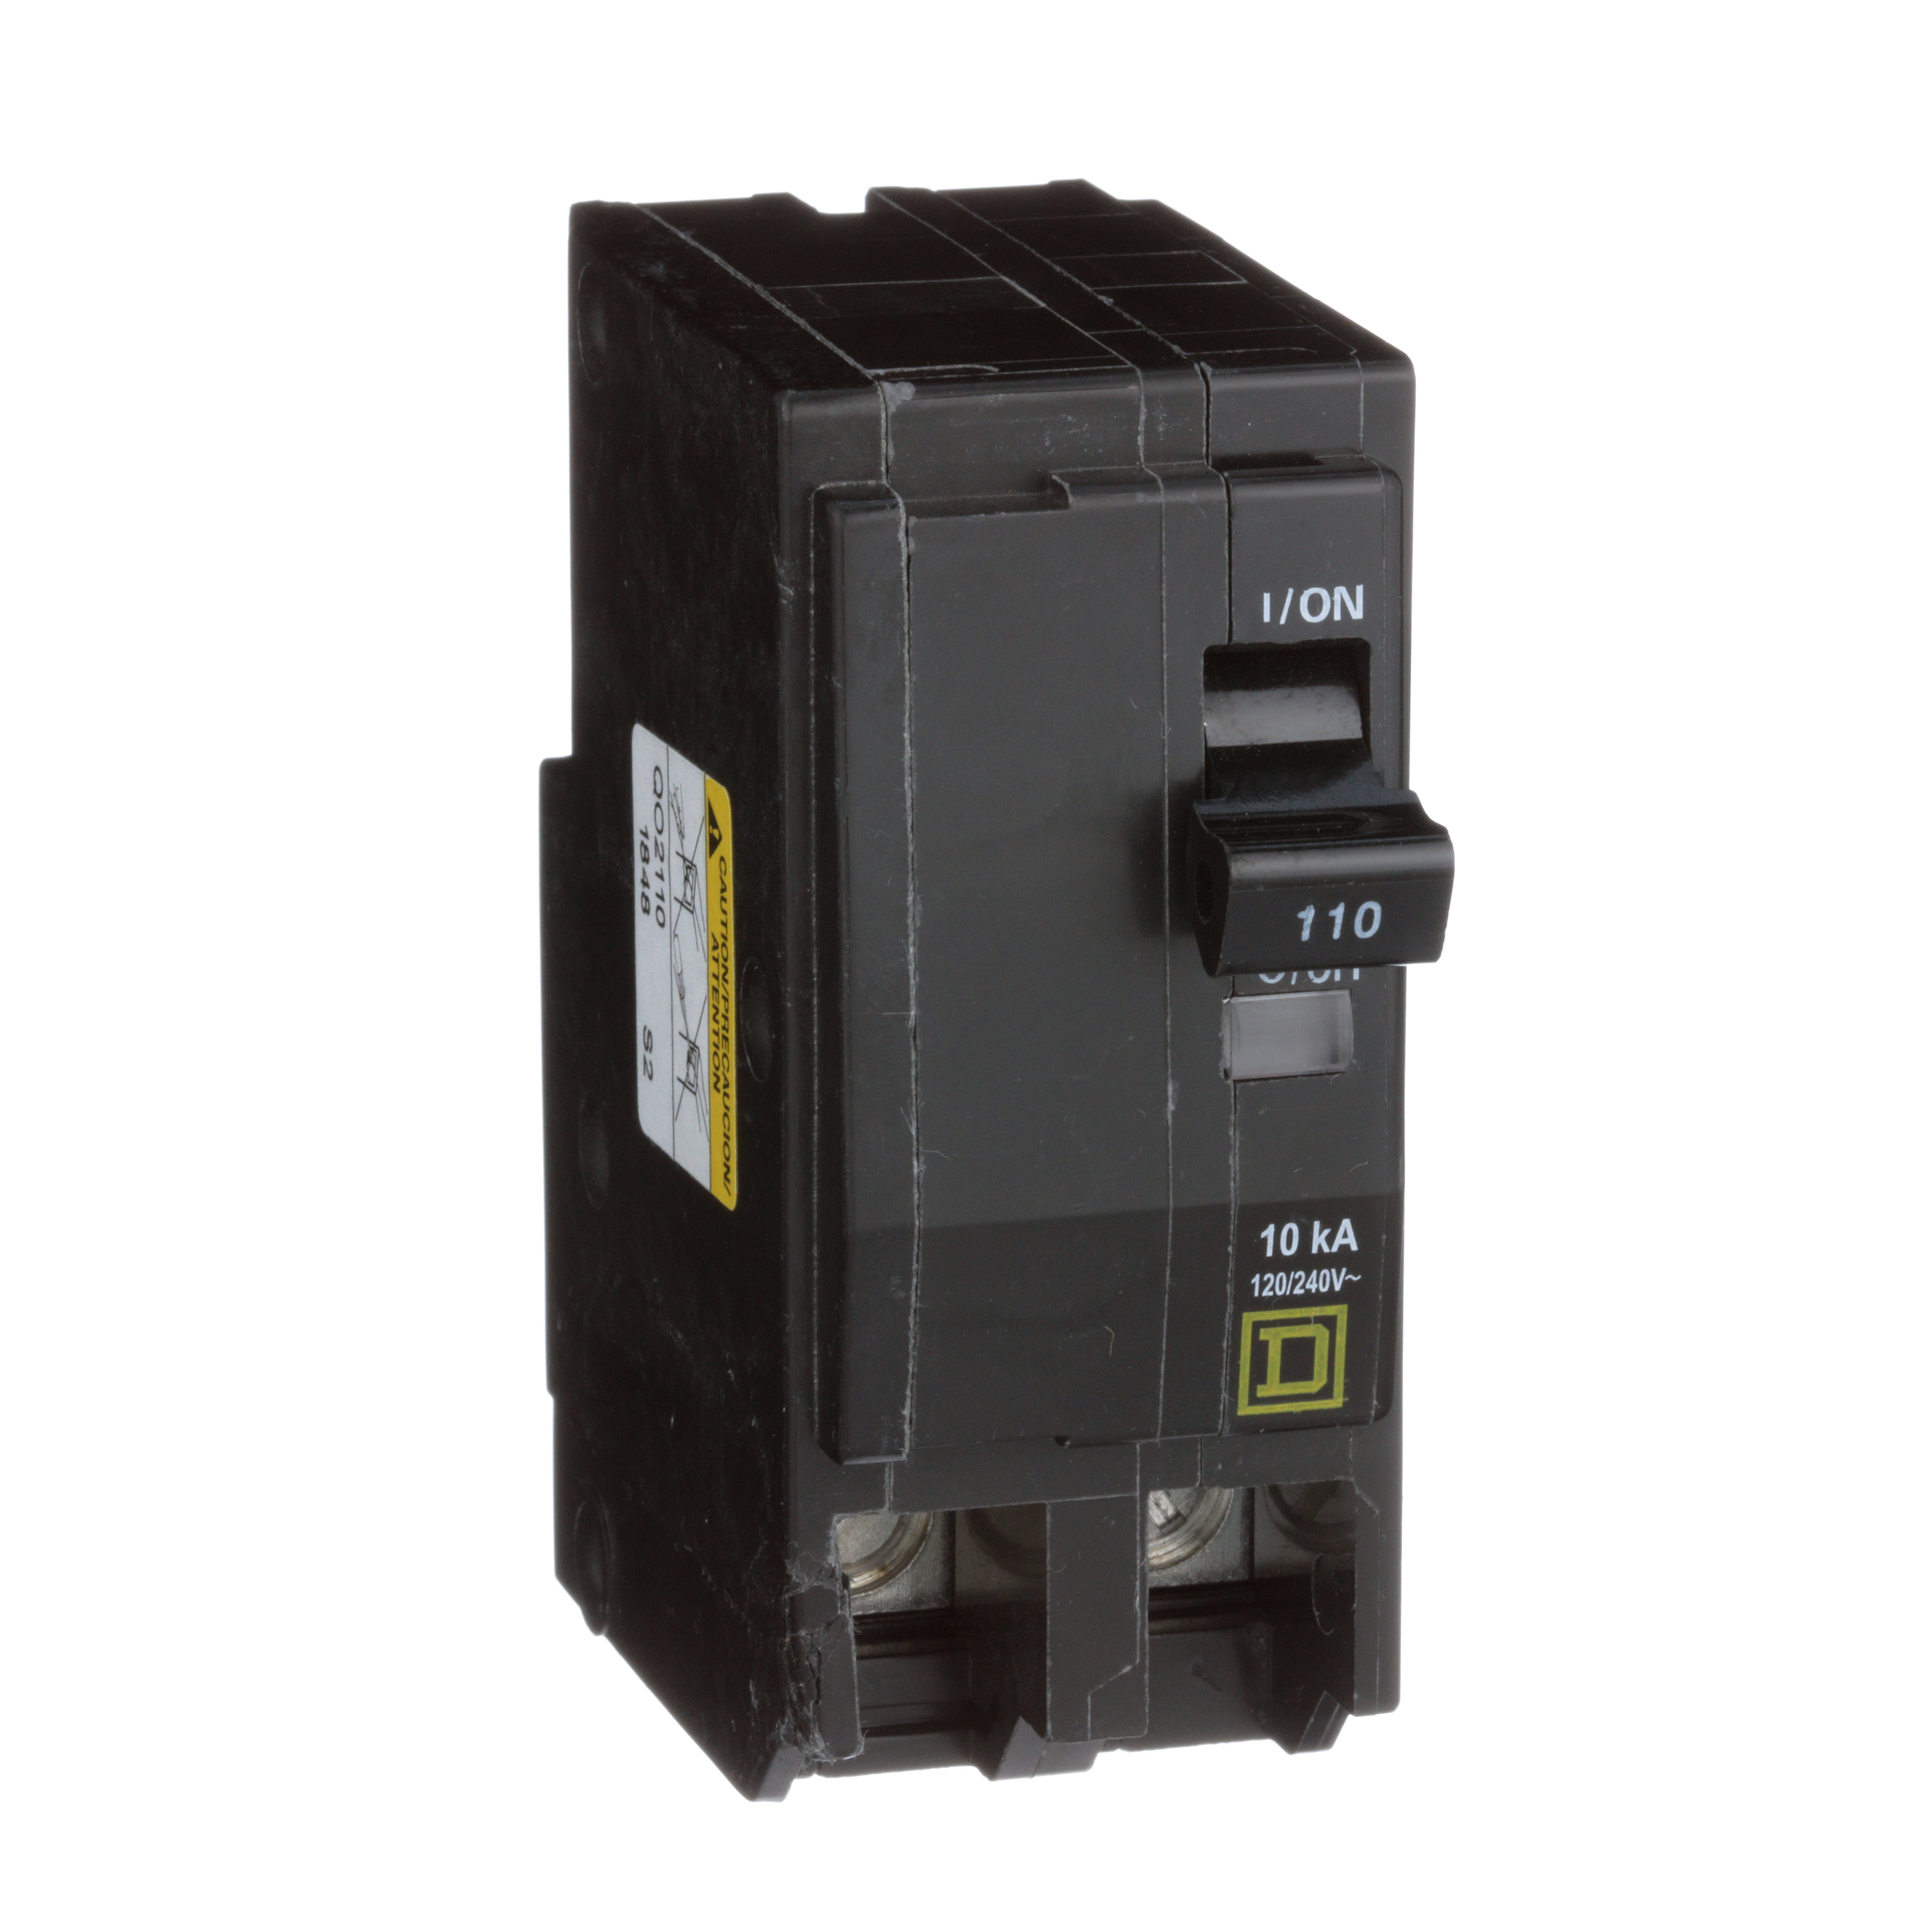 Mini circuit breaker, QO, 110A, 2 pole, 120/240VAC, 10kA, plug in